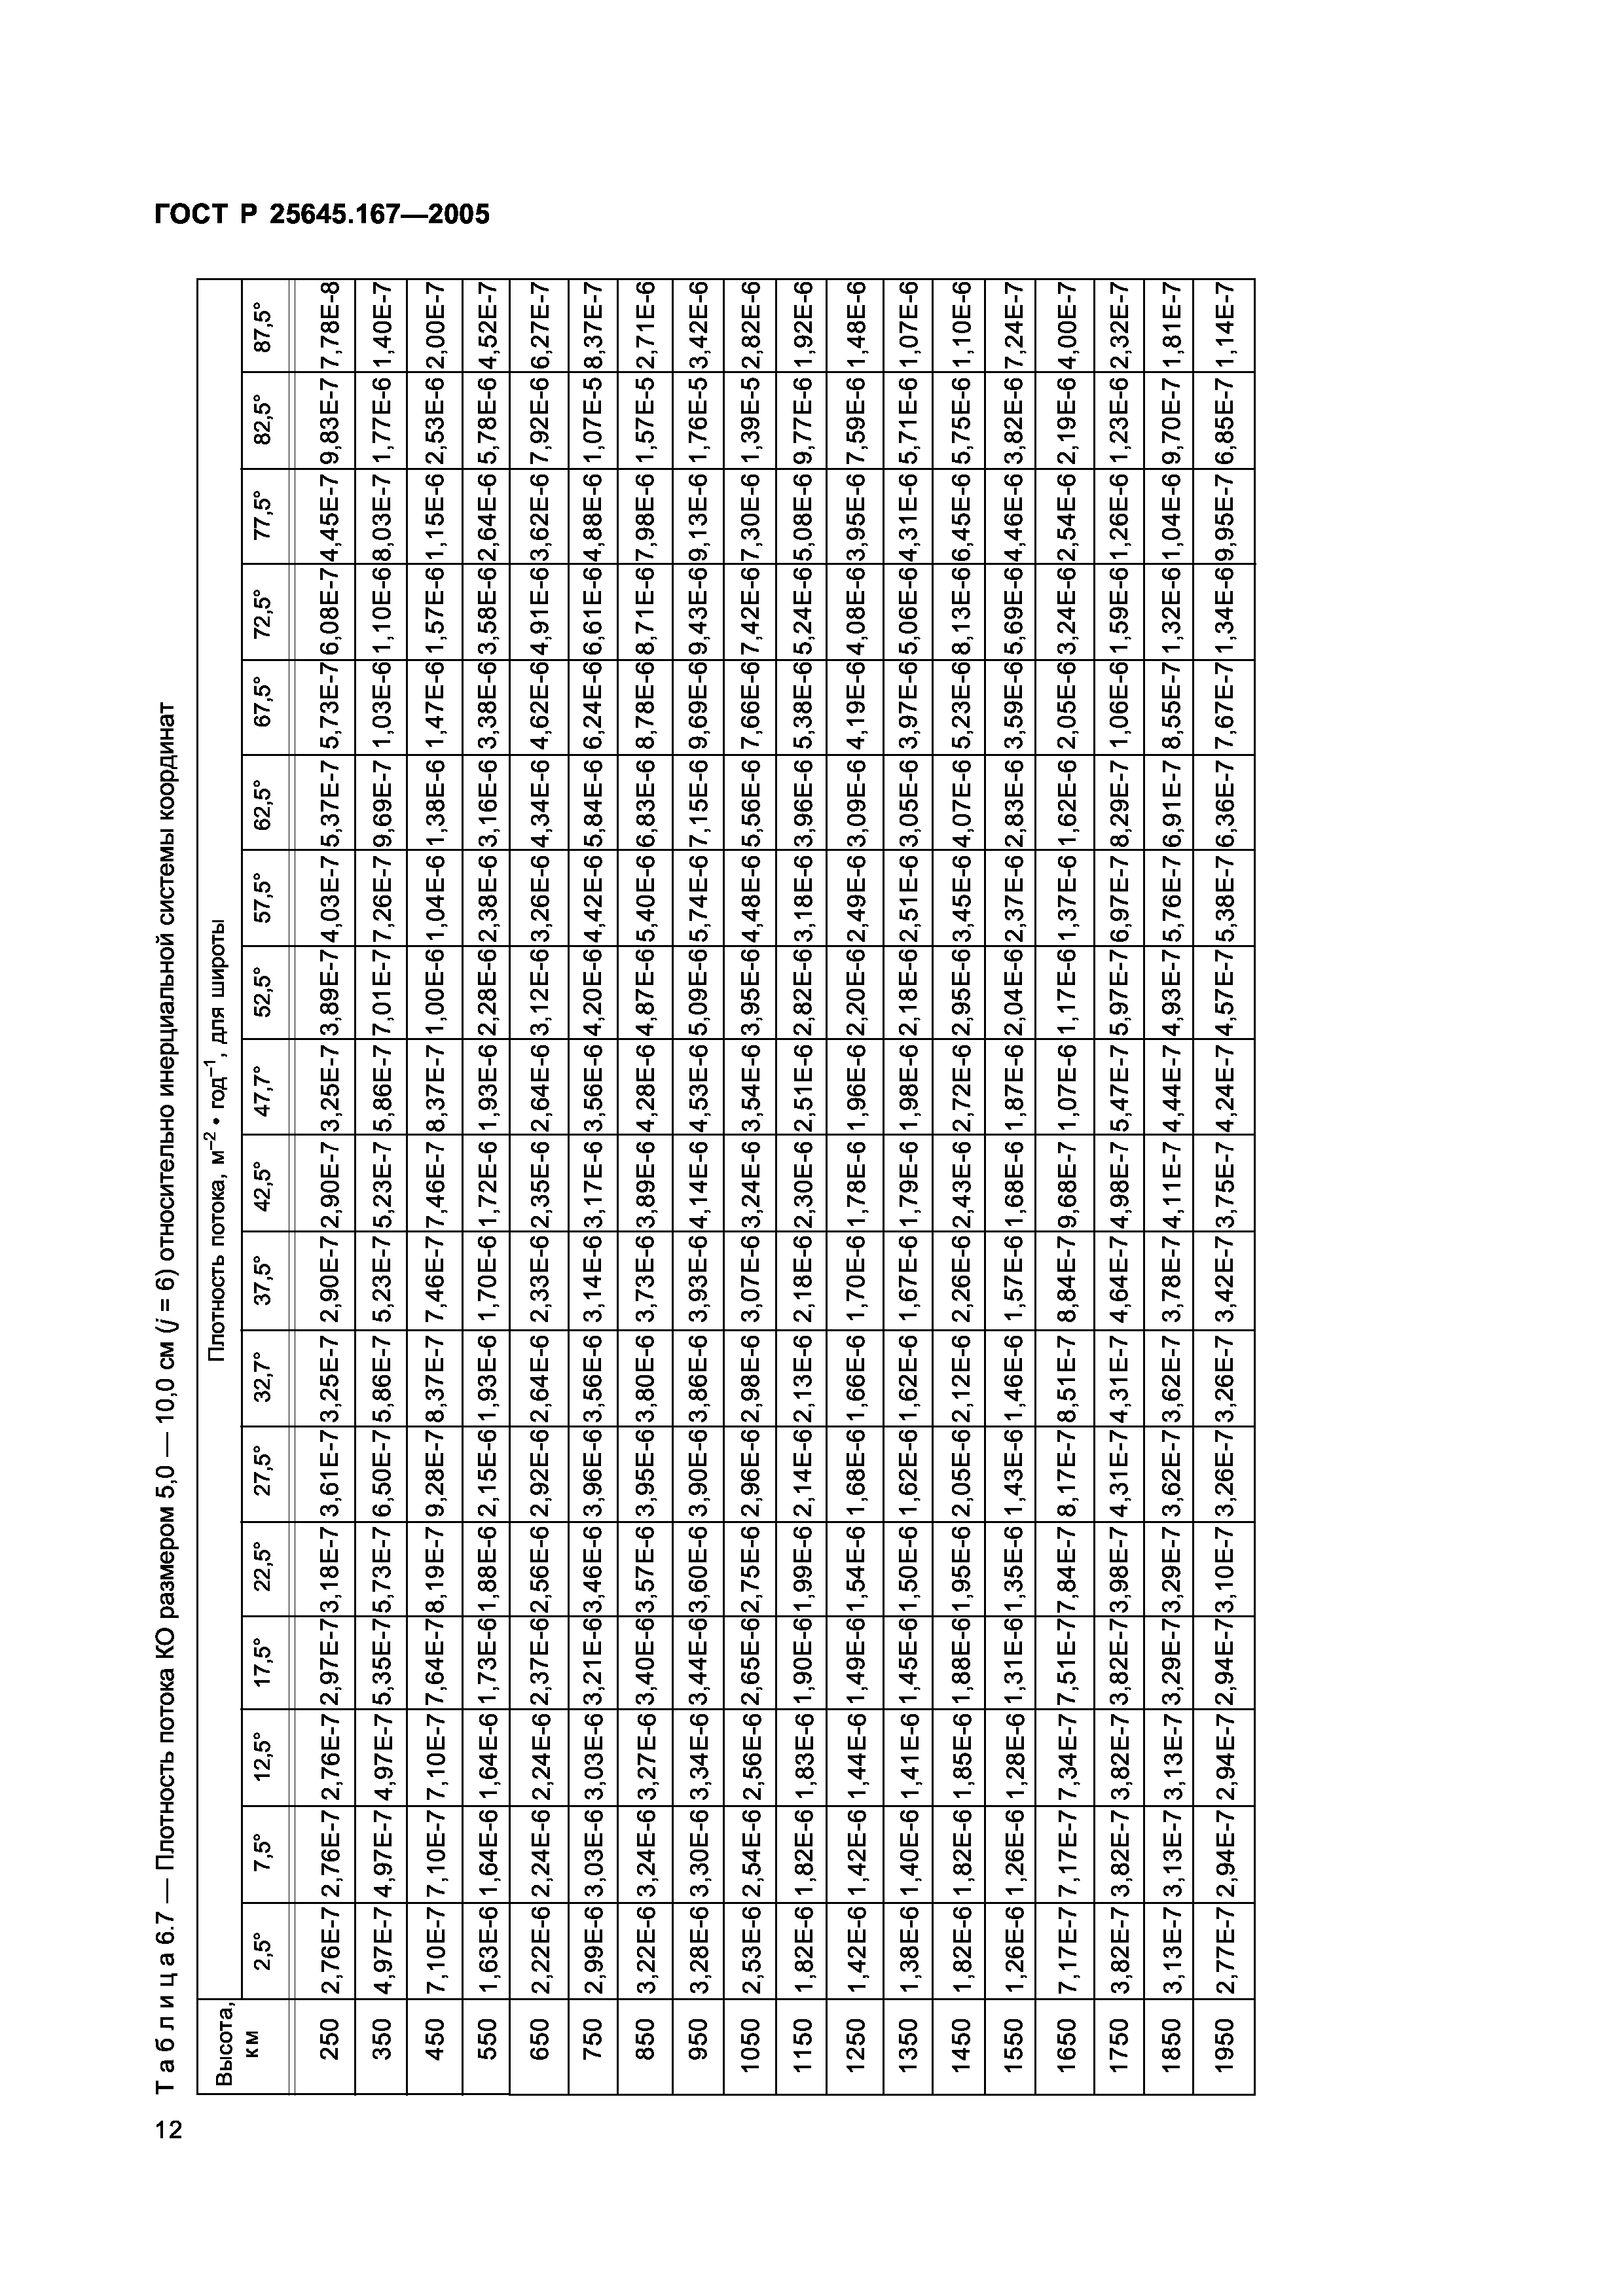 ГОСТ Р 25645.167-2005